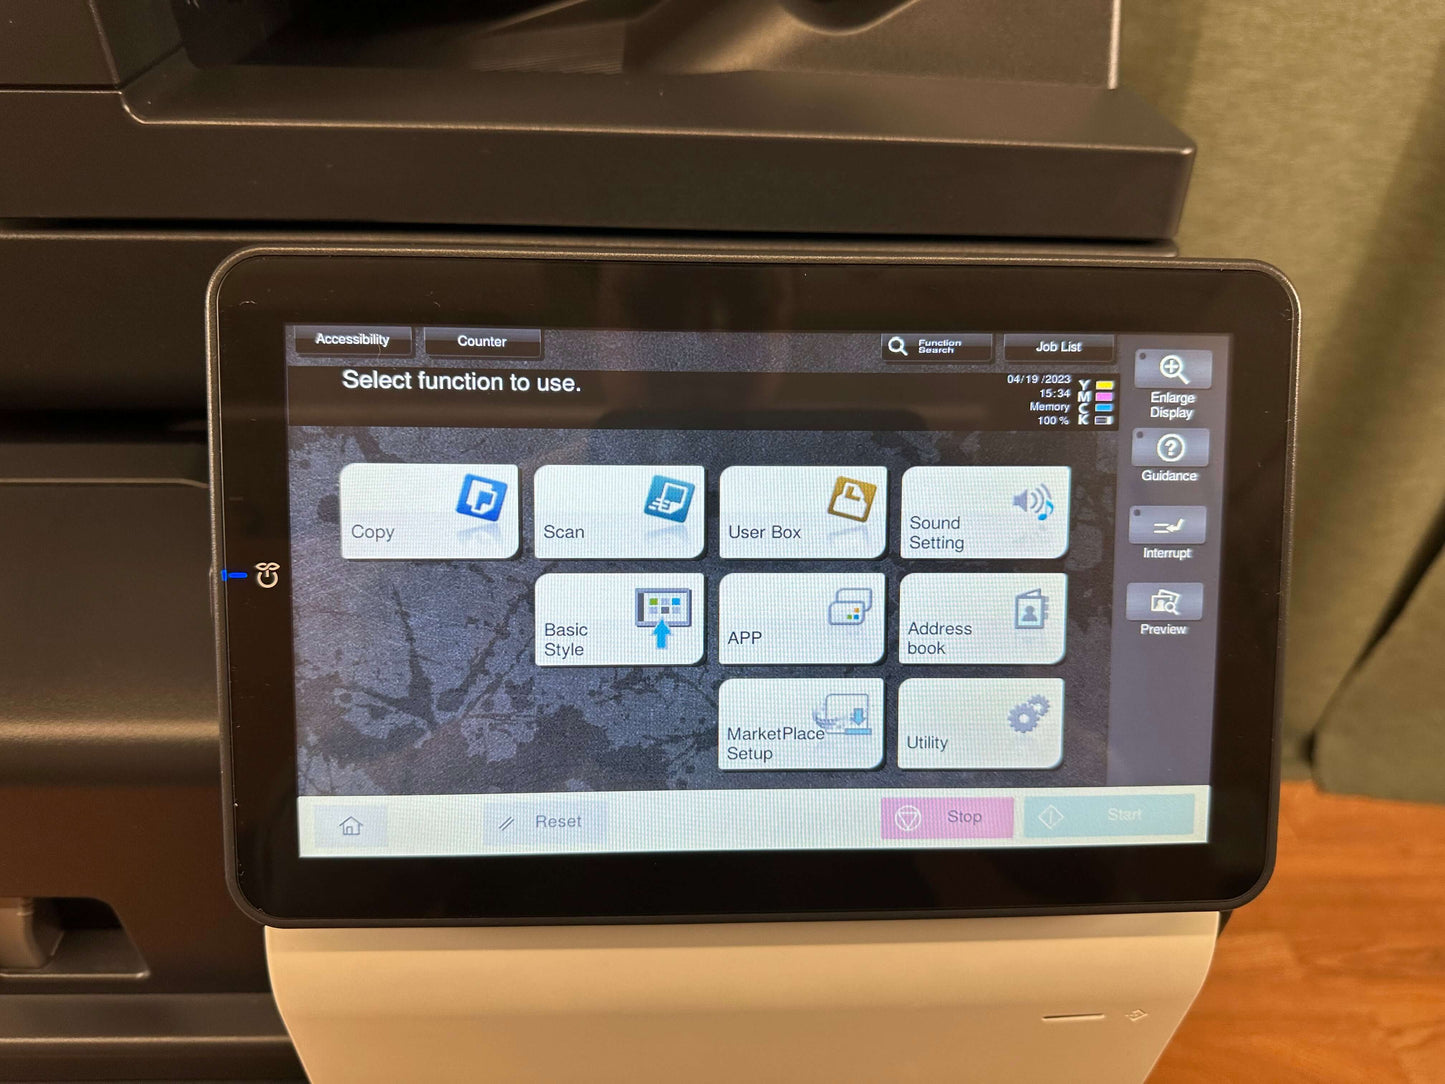 WOW Demo Unit Konica Minolta Bizhub C250i Color Copier Printer Scan Low 8k Usage